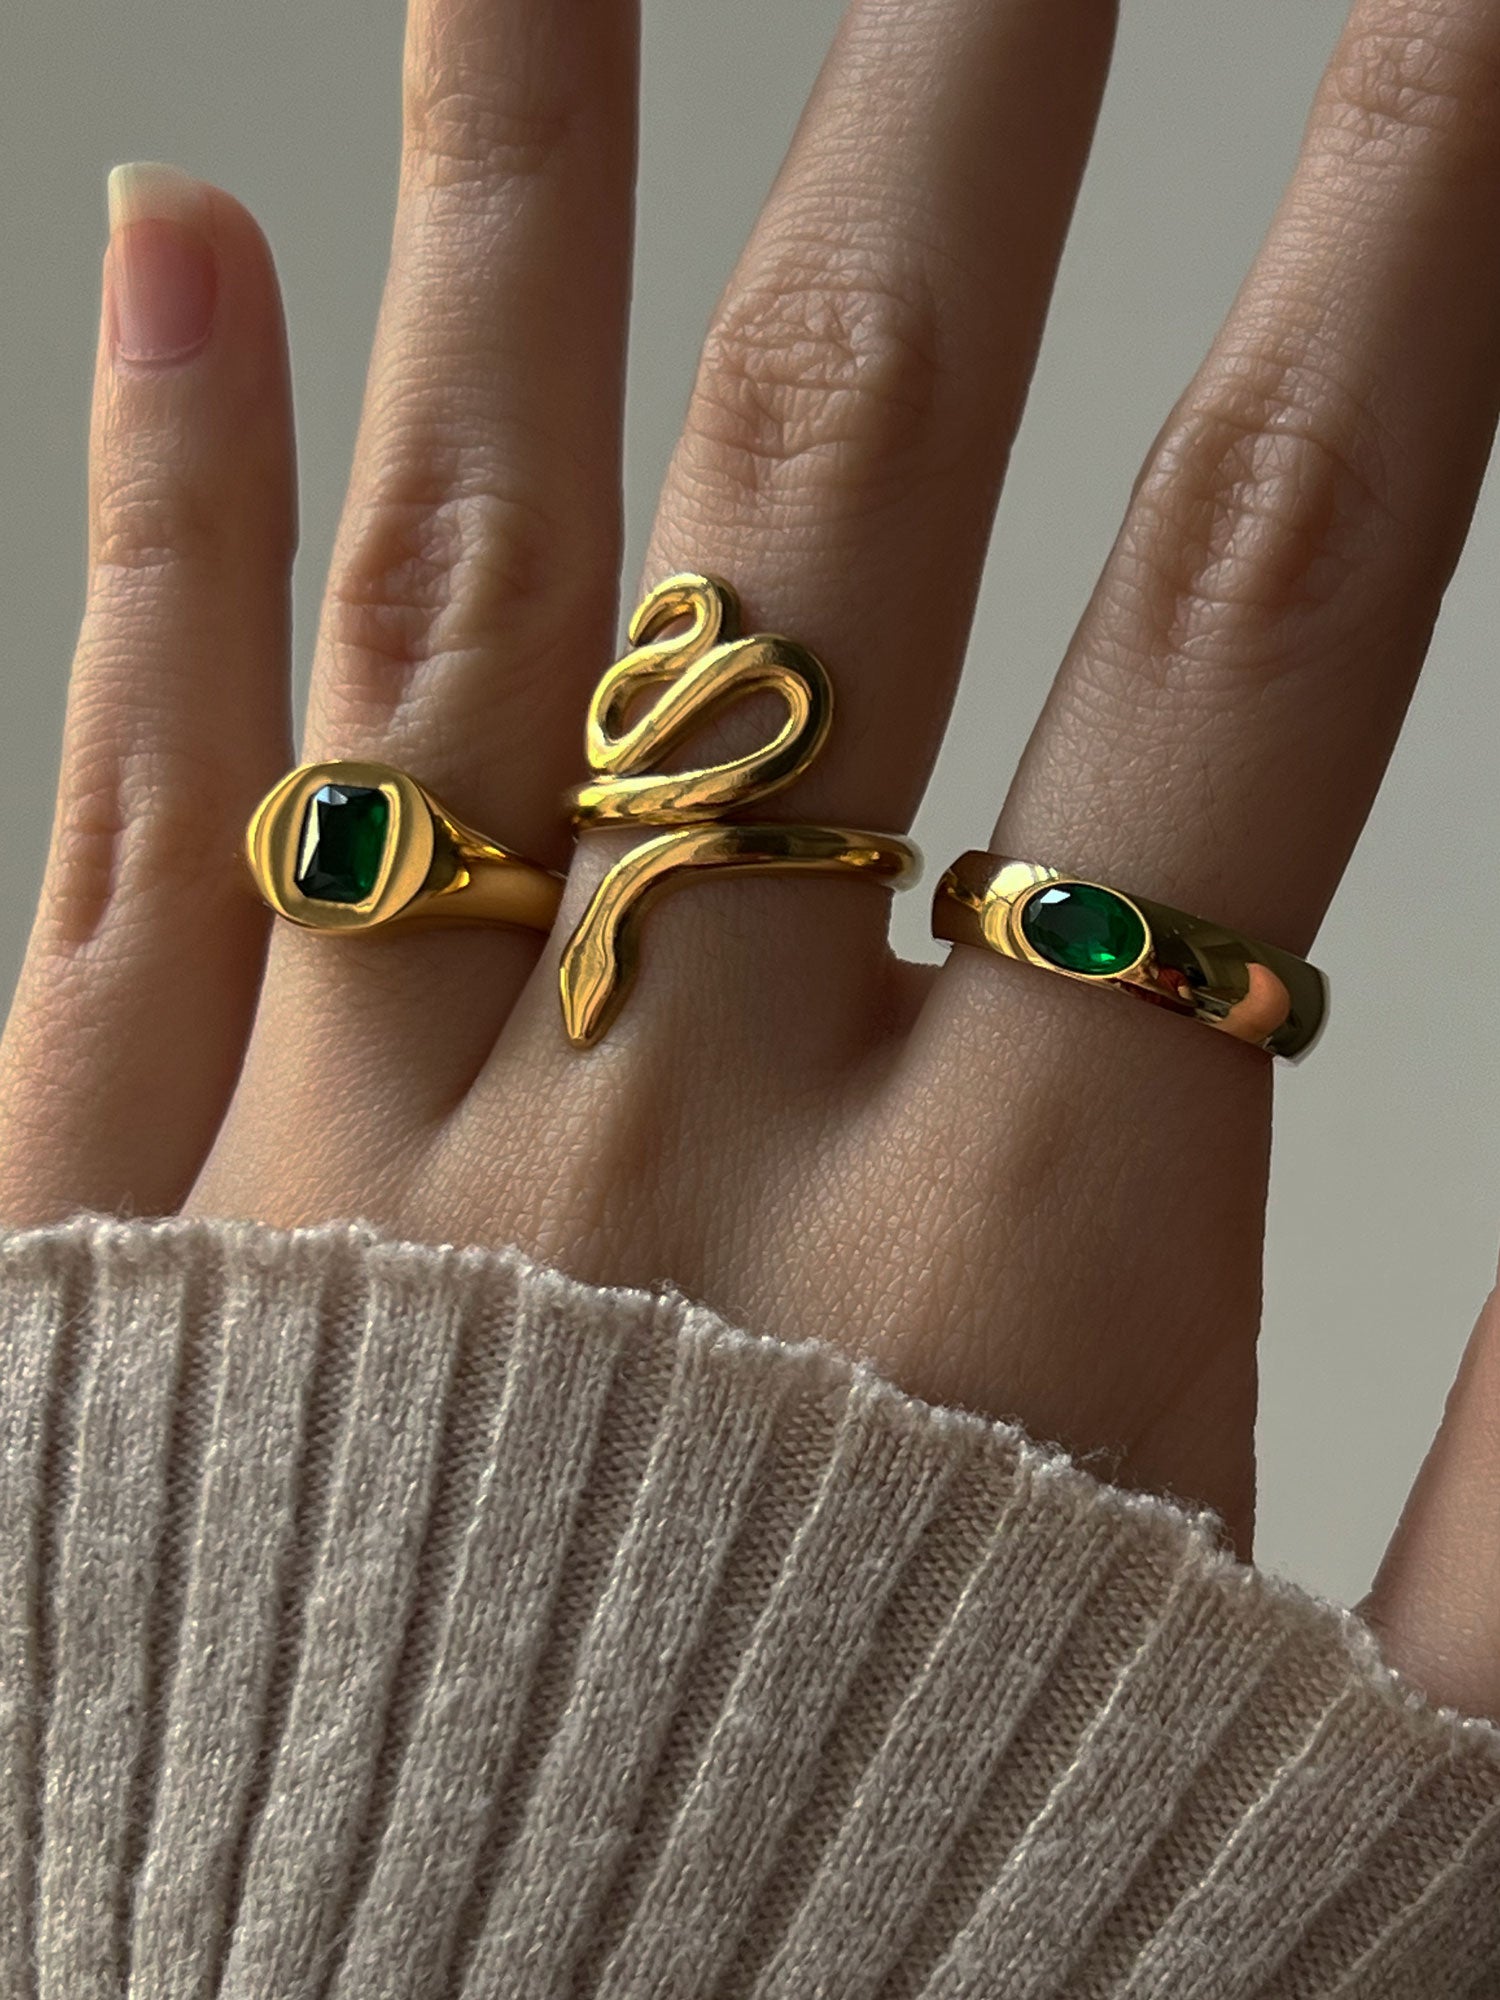 Signet Ring with Rectangular Gem - Emerald Green